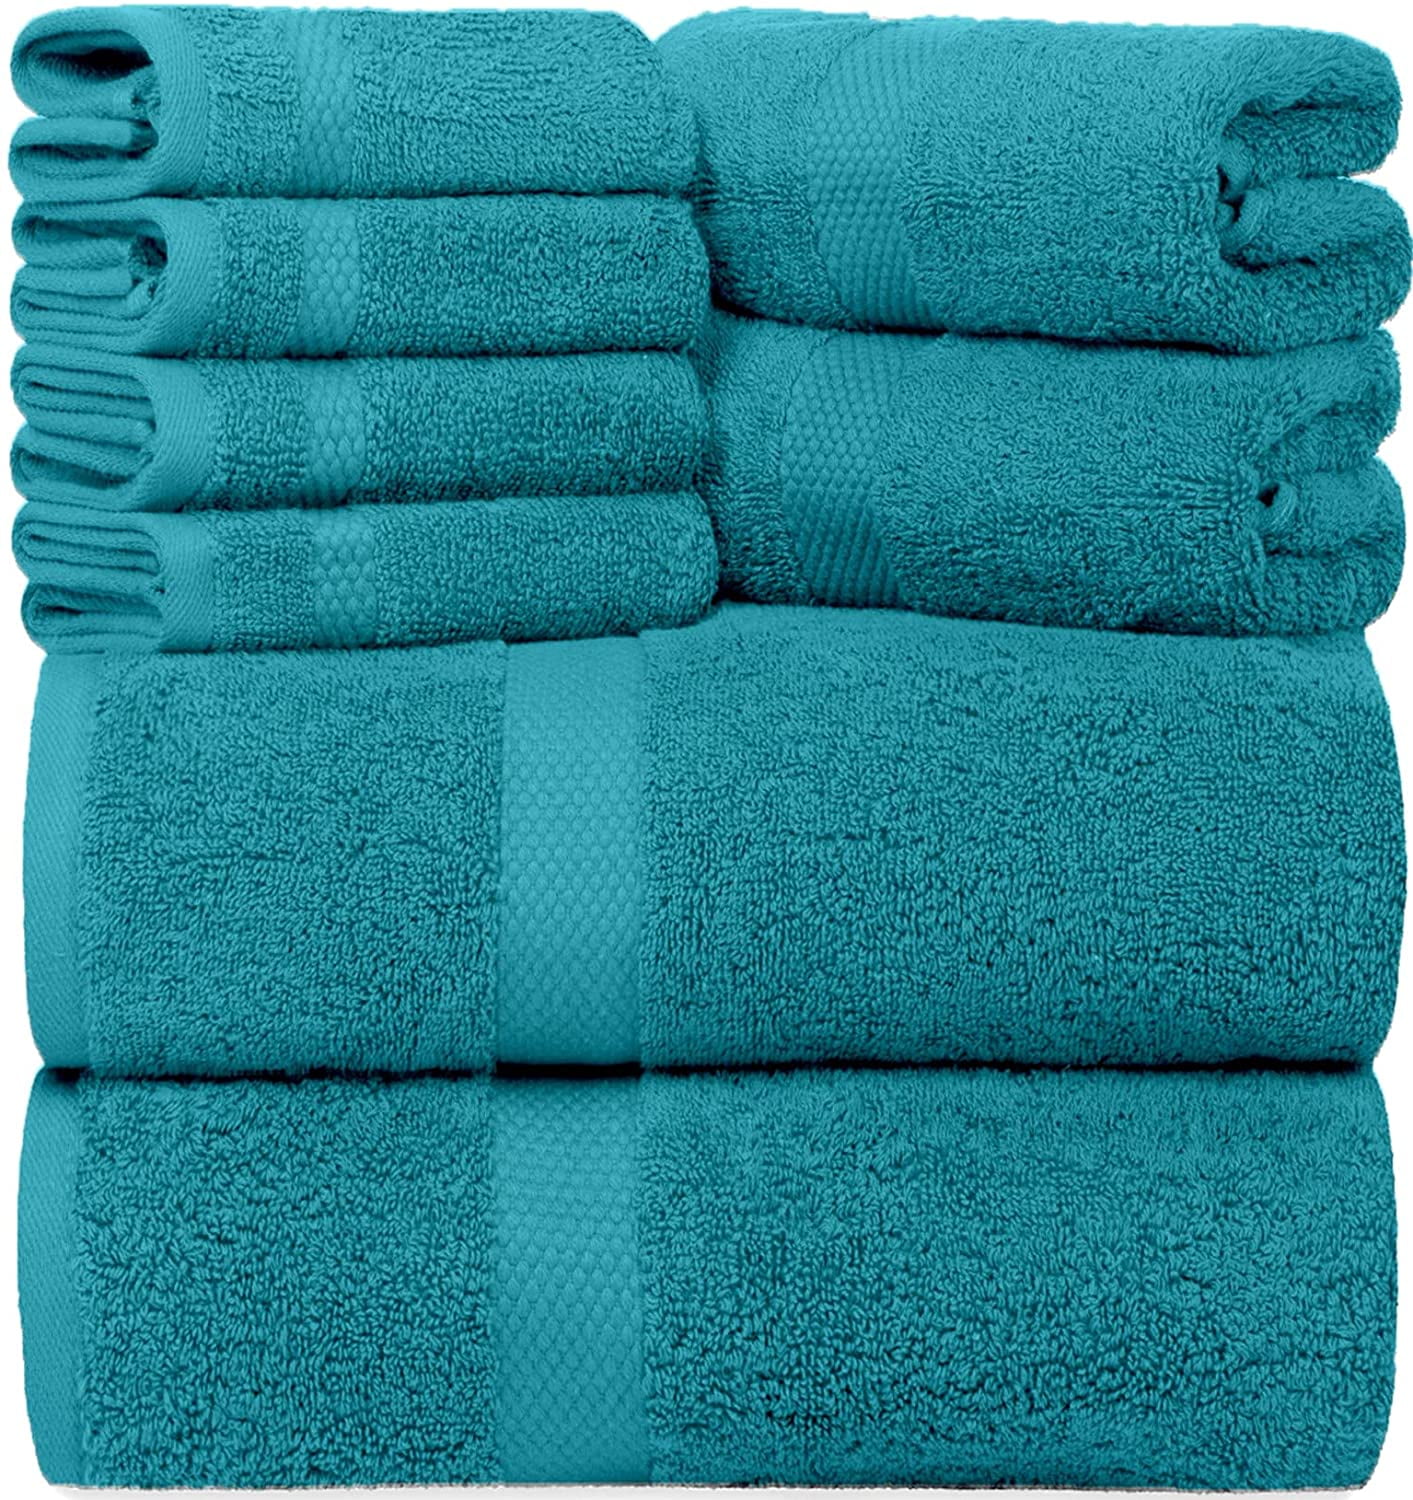 White Classic Luxury Bath Towels - Cotton Hotel spa Towel 27x54 4-Pack Aqua  